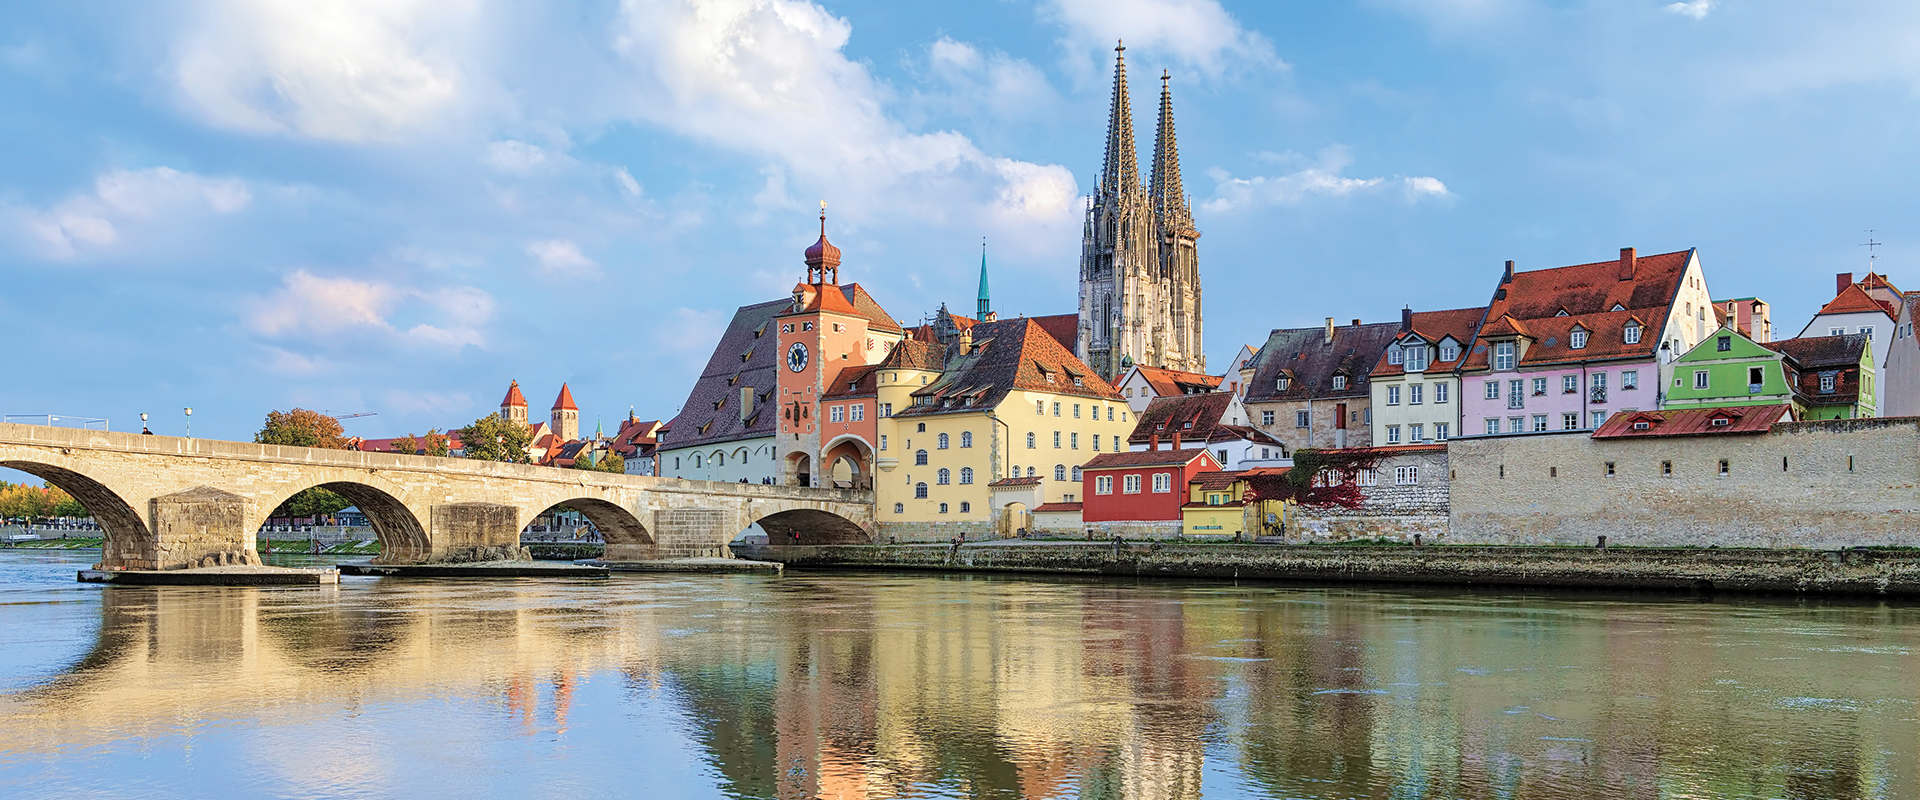 Visit Regensburg Cathedral Bridge with Travelmarvel.